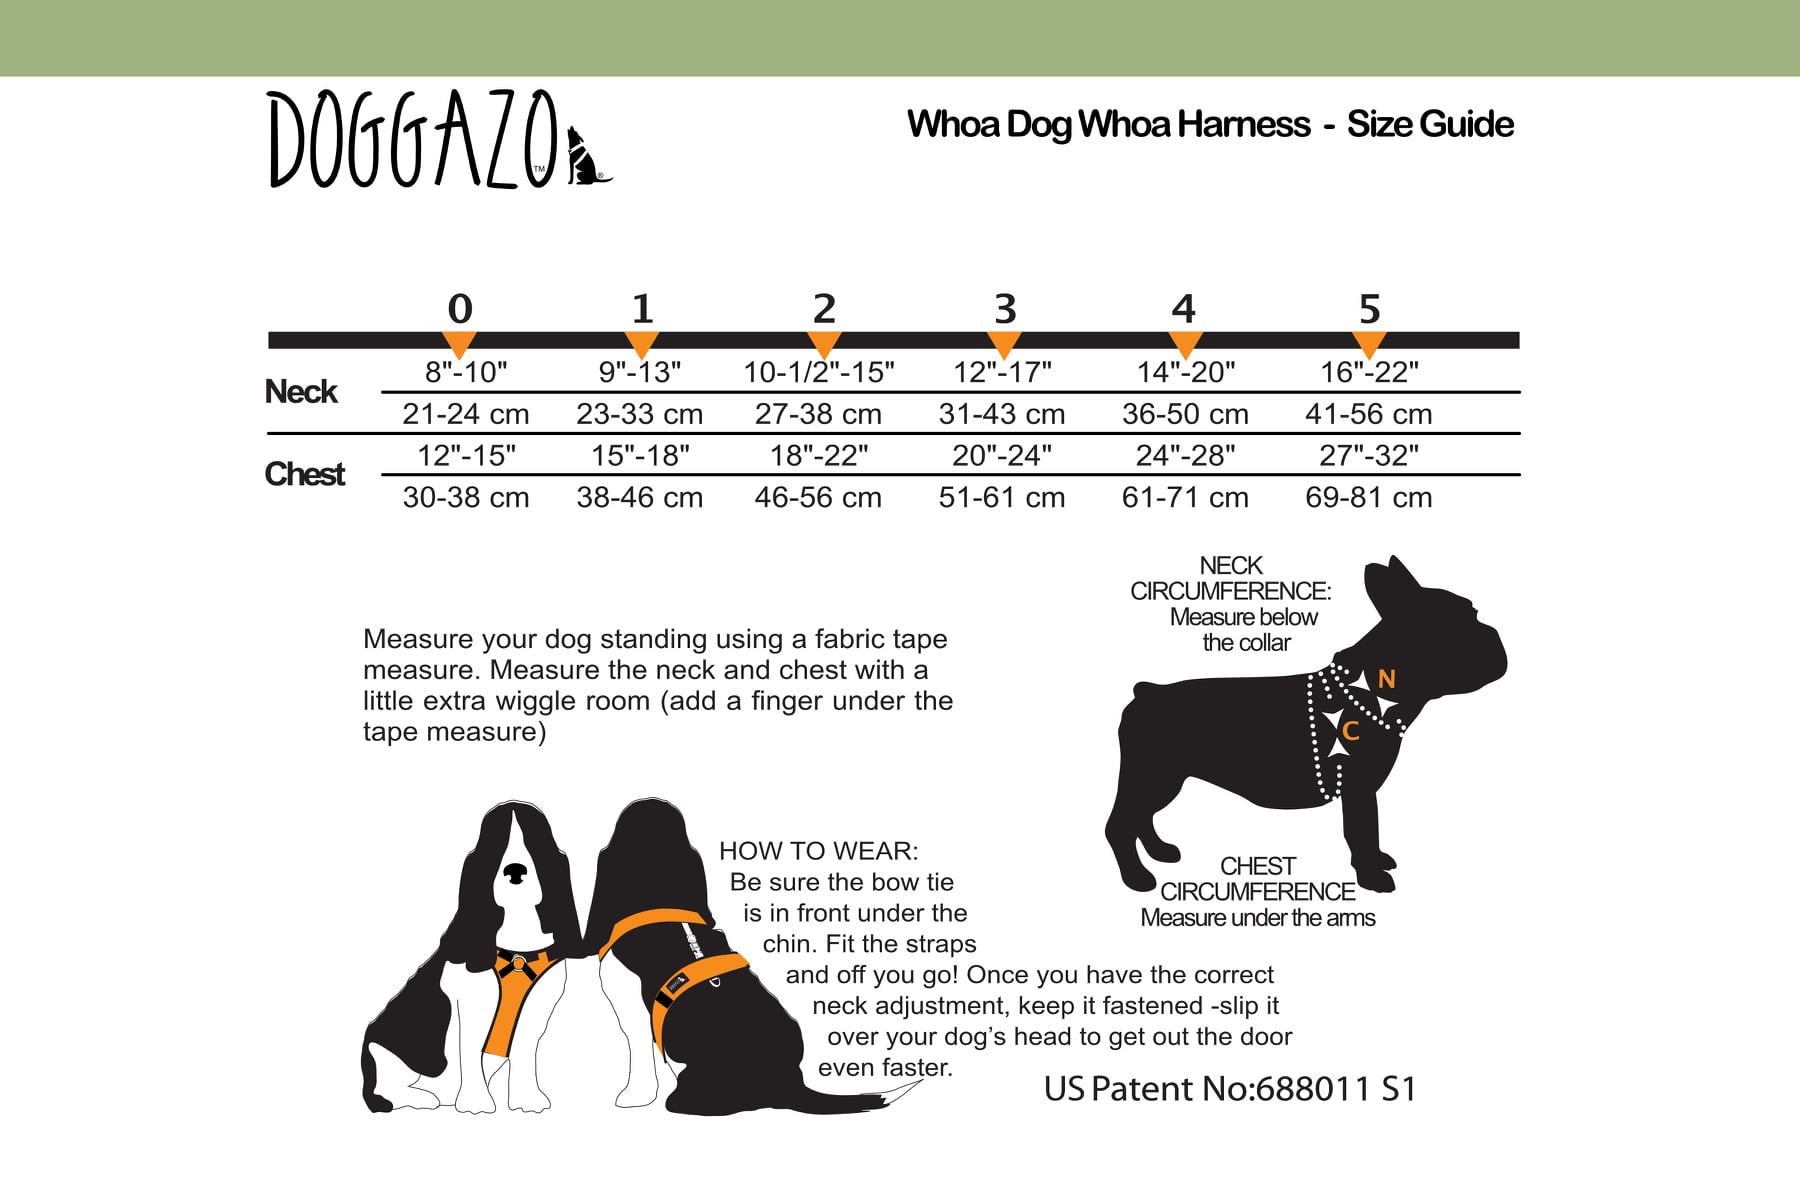 Doggazo Whoa Dog Whoa Harness Size Guide